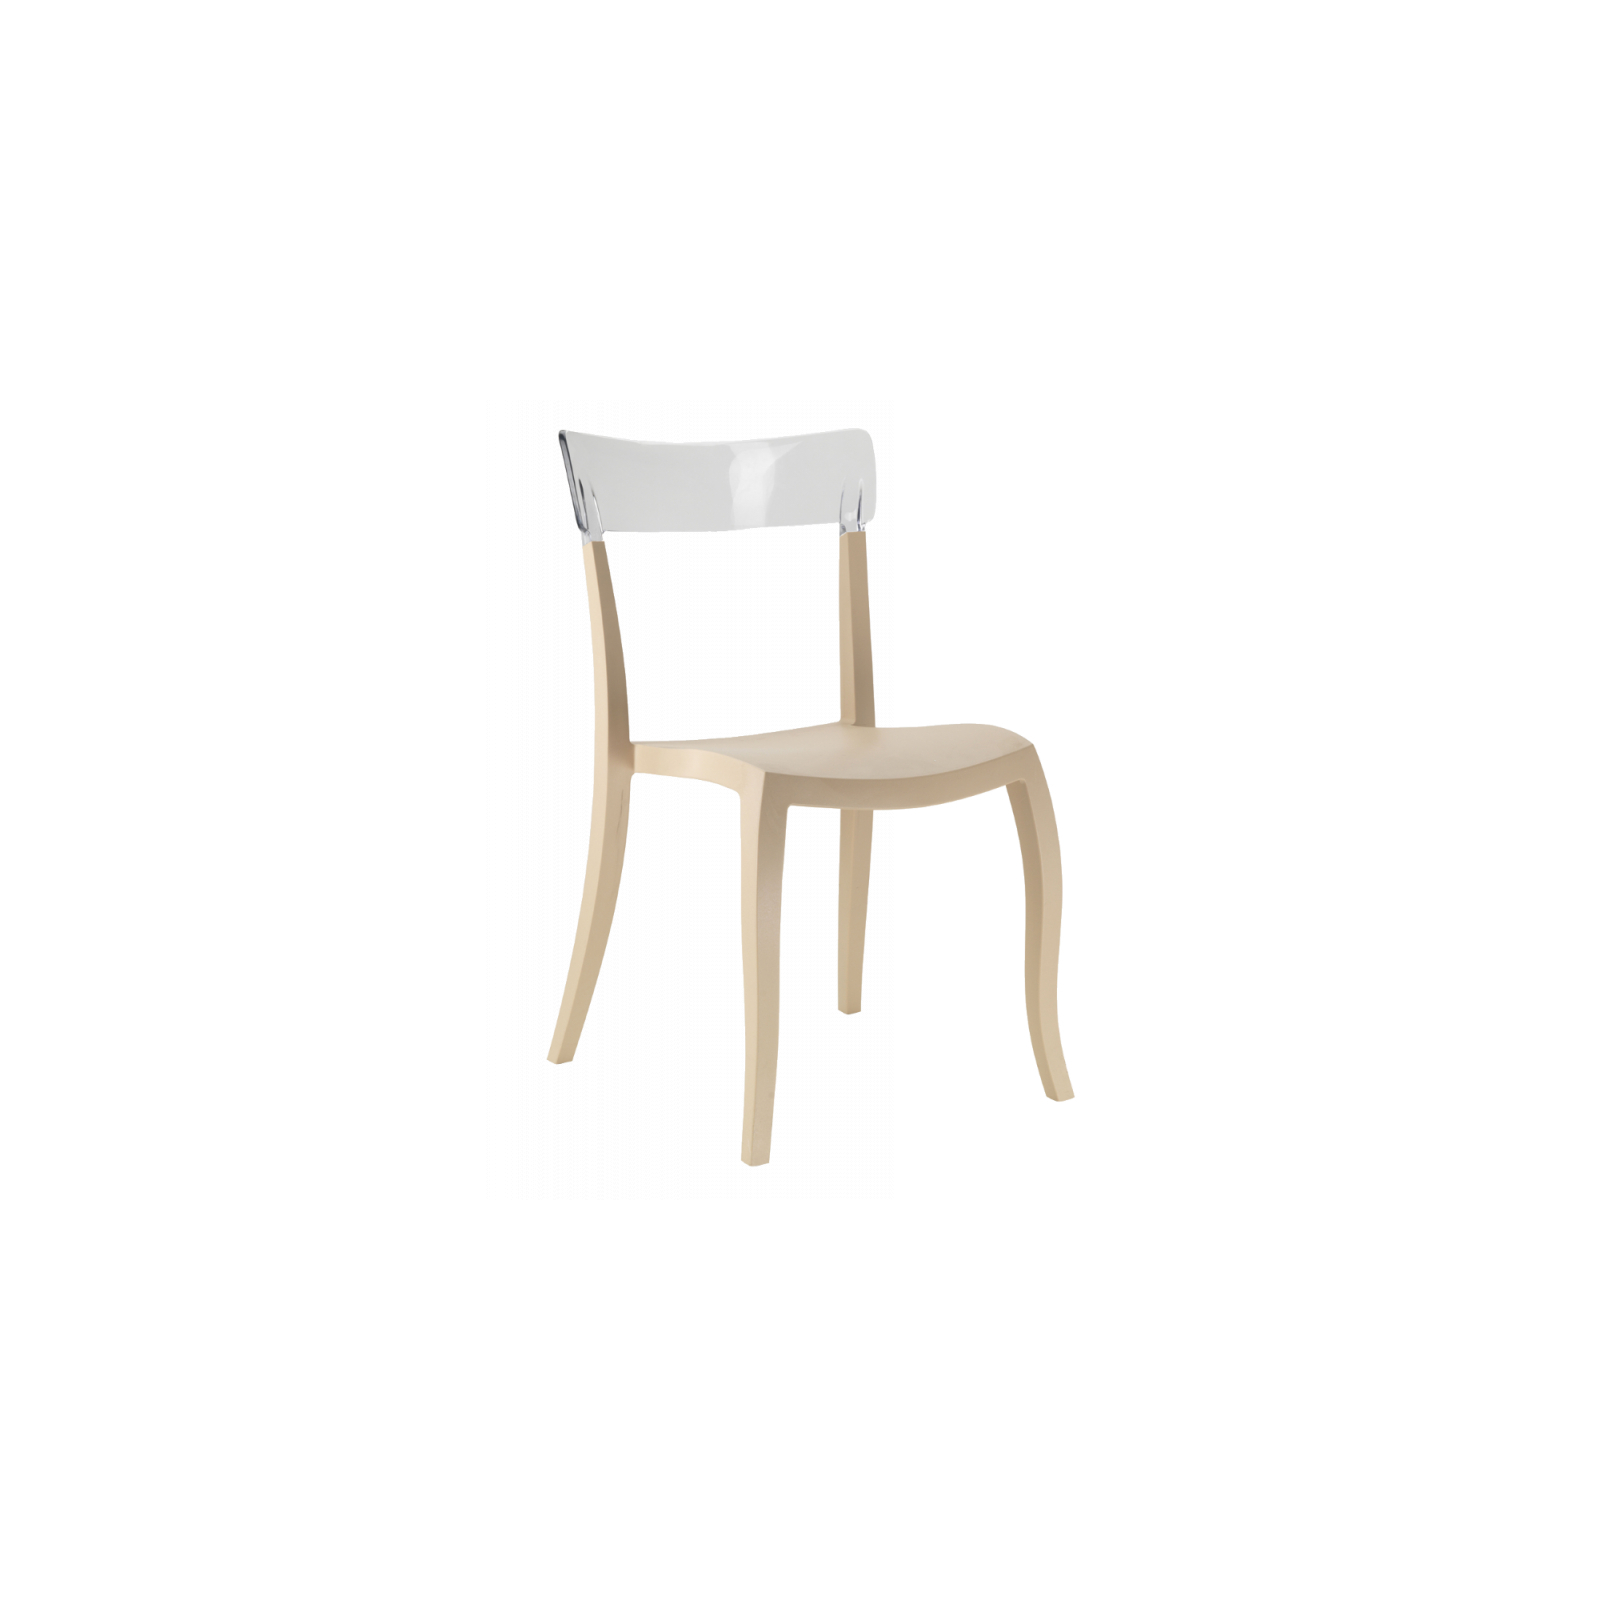 Кухонный стул PAPATYA hera-s сиденье беж, верх прозрачно-чистый (2239)